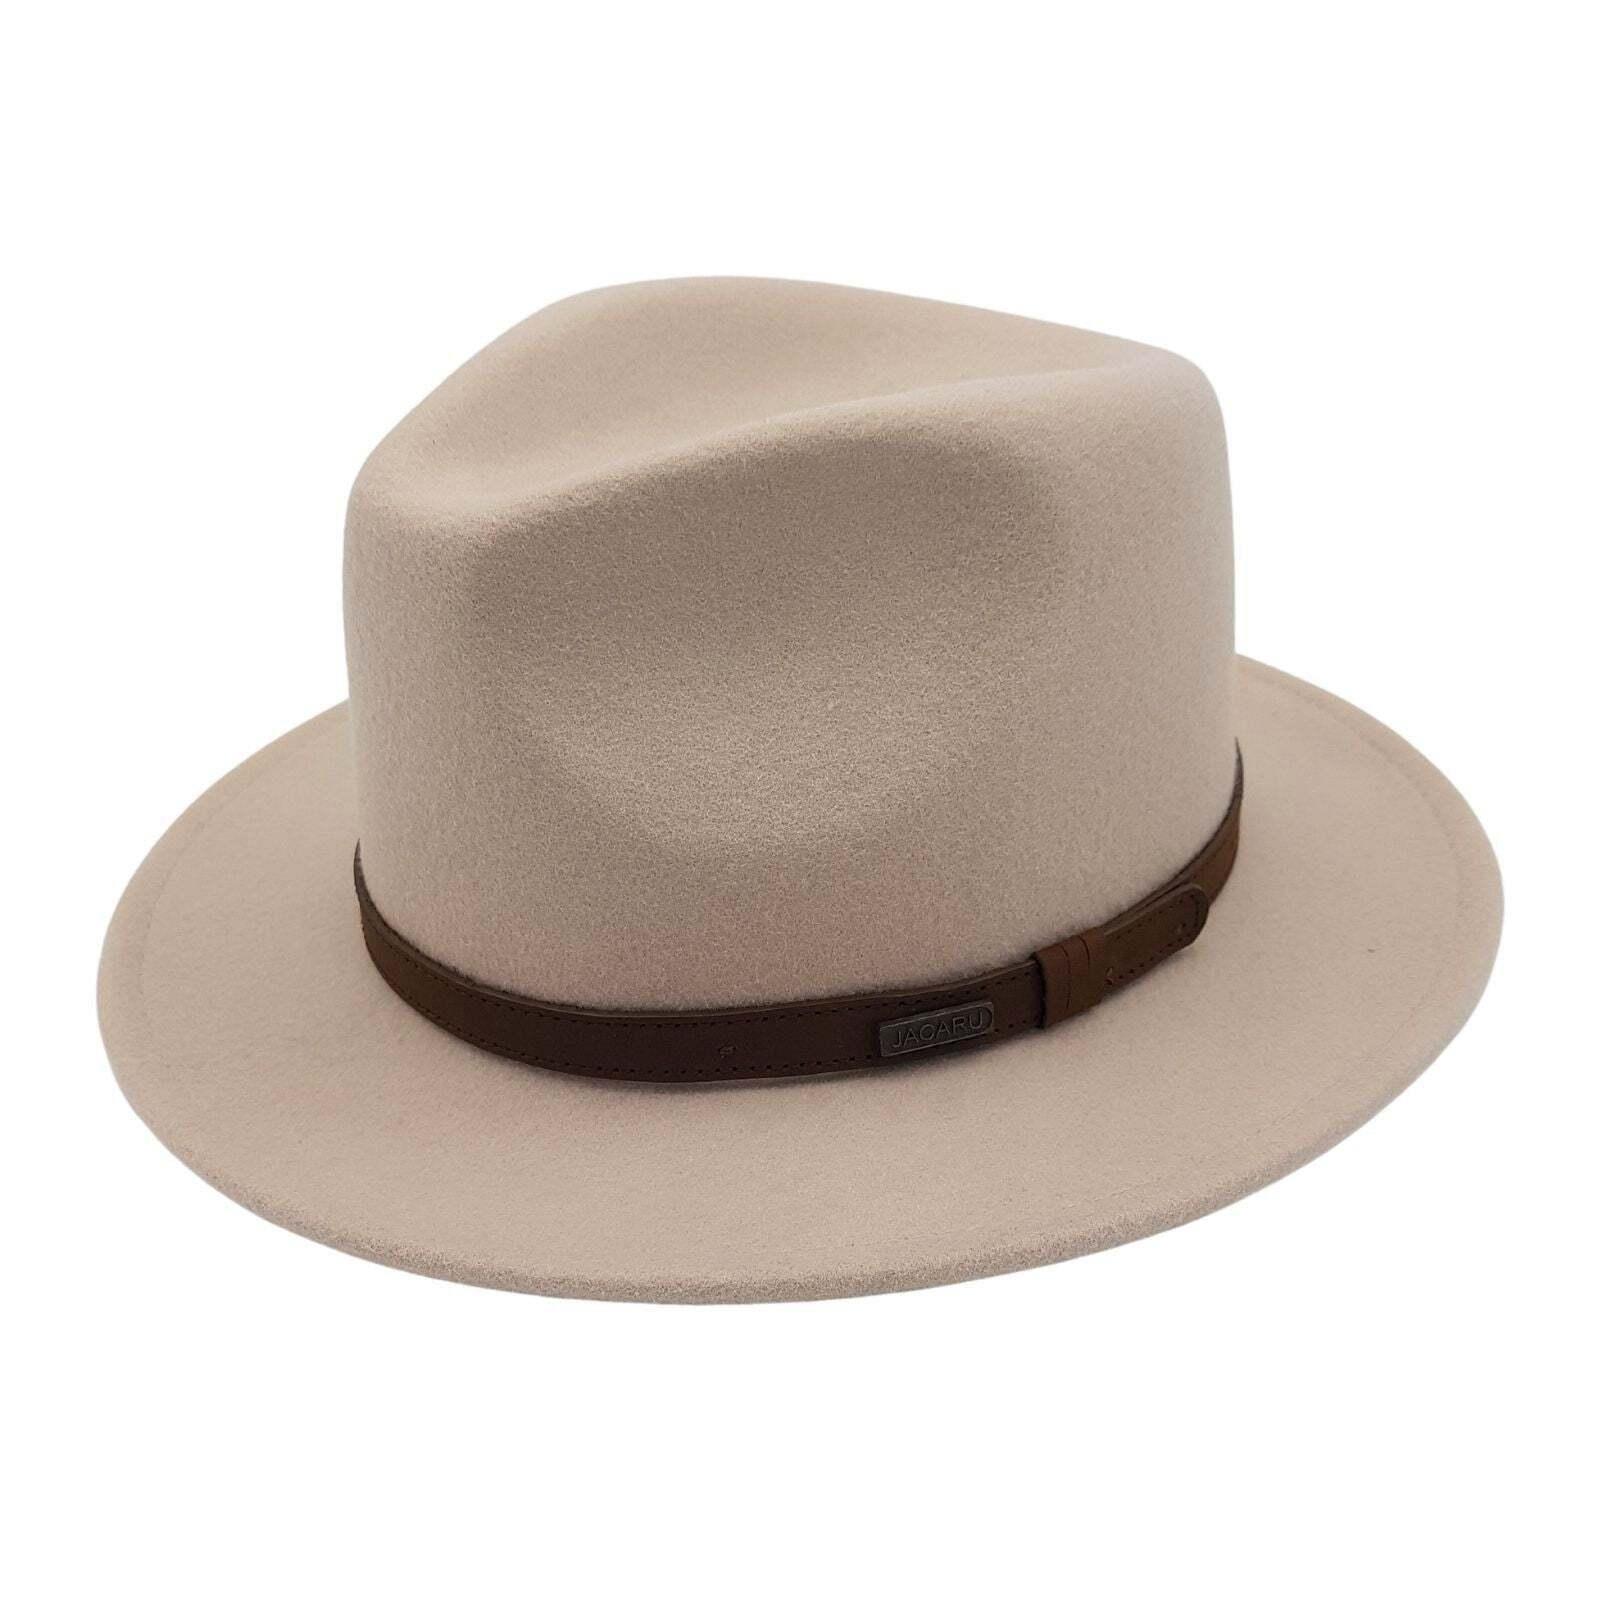 Jacaru 1851 Walkabout Wool Felt Fedora Hat Outback - Cream - Medium